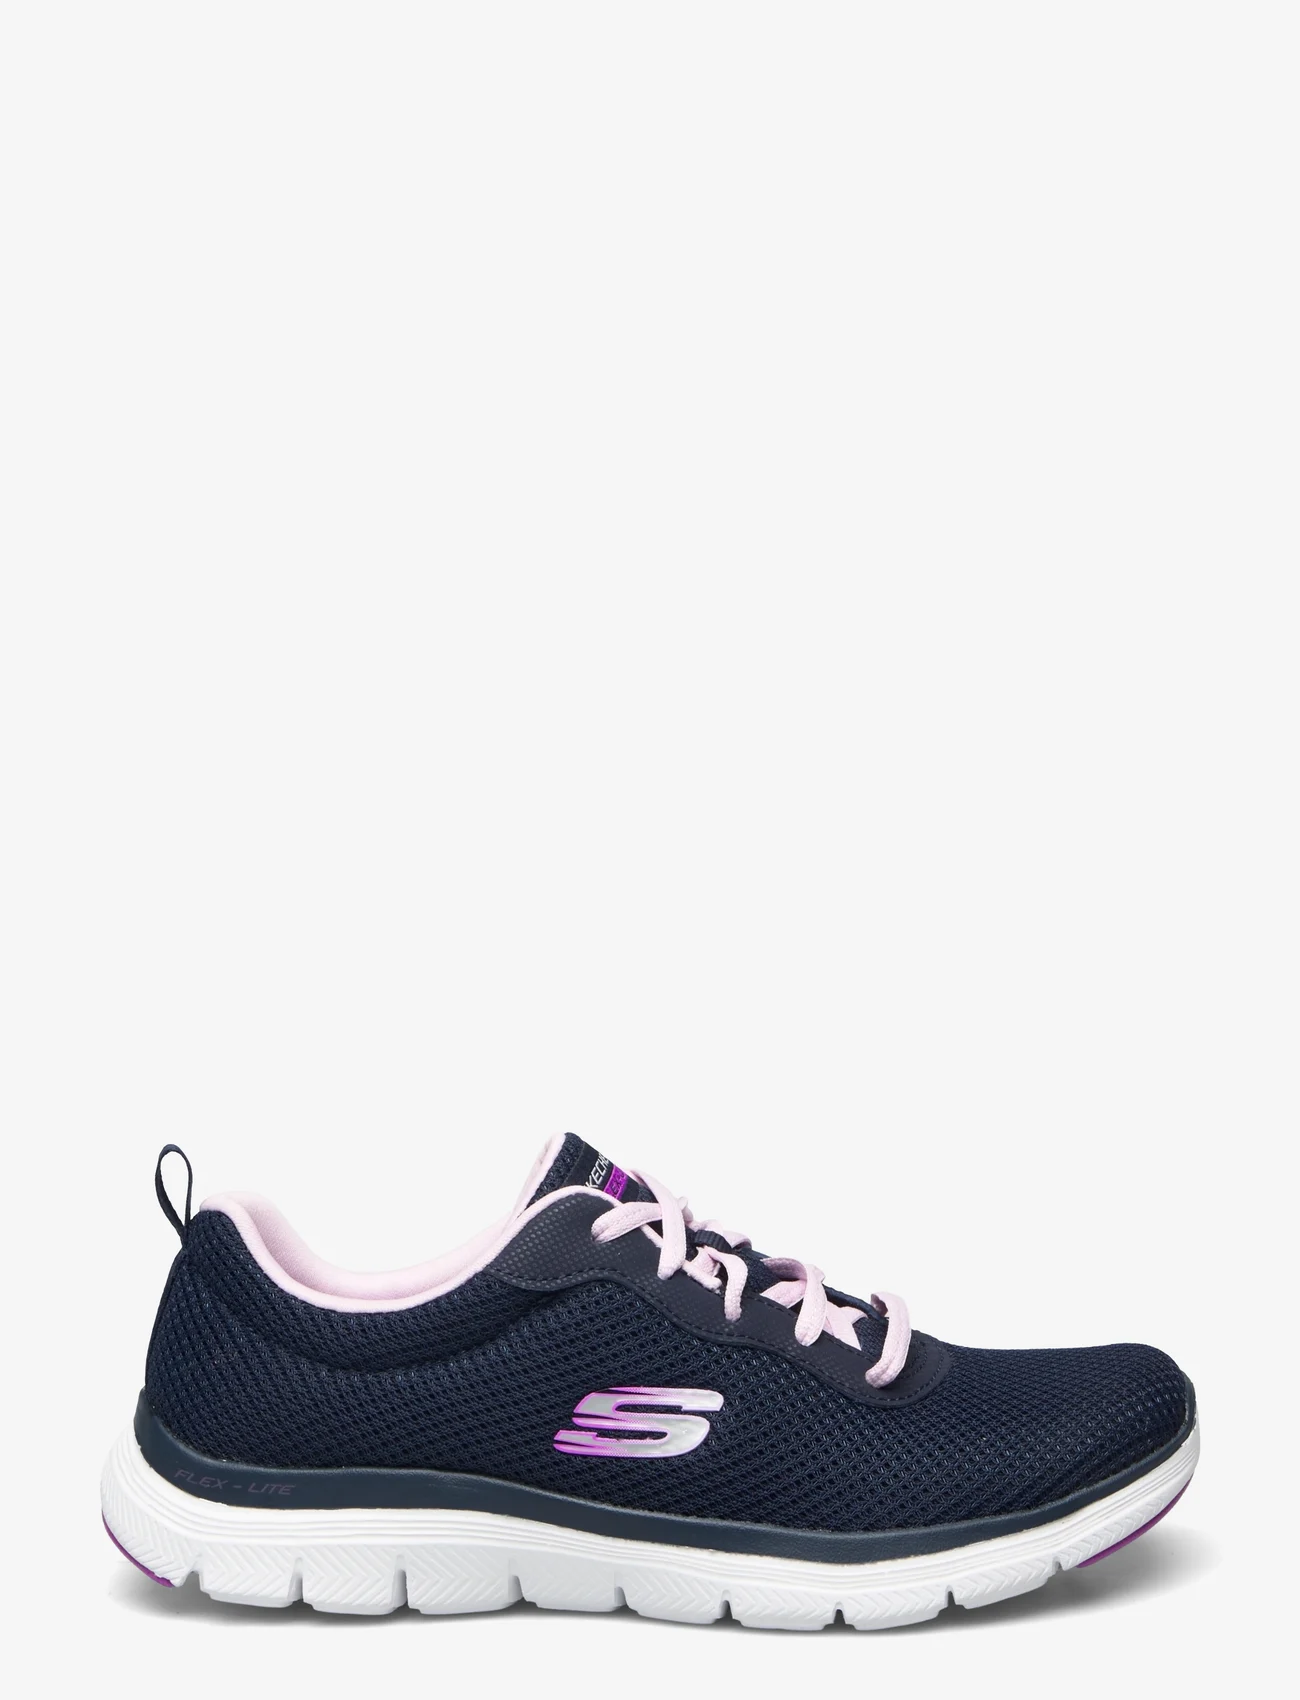 Skechers - Womens Flex Appeal 4.0 - Brilliant View - lave sneakers - nvlv navy lavender - 1